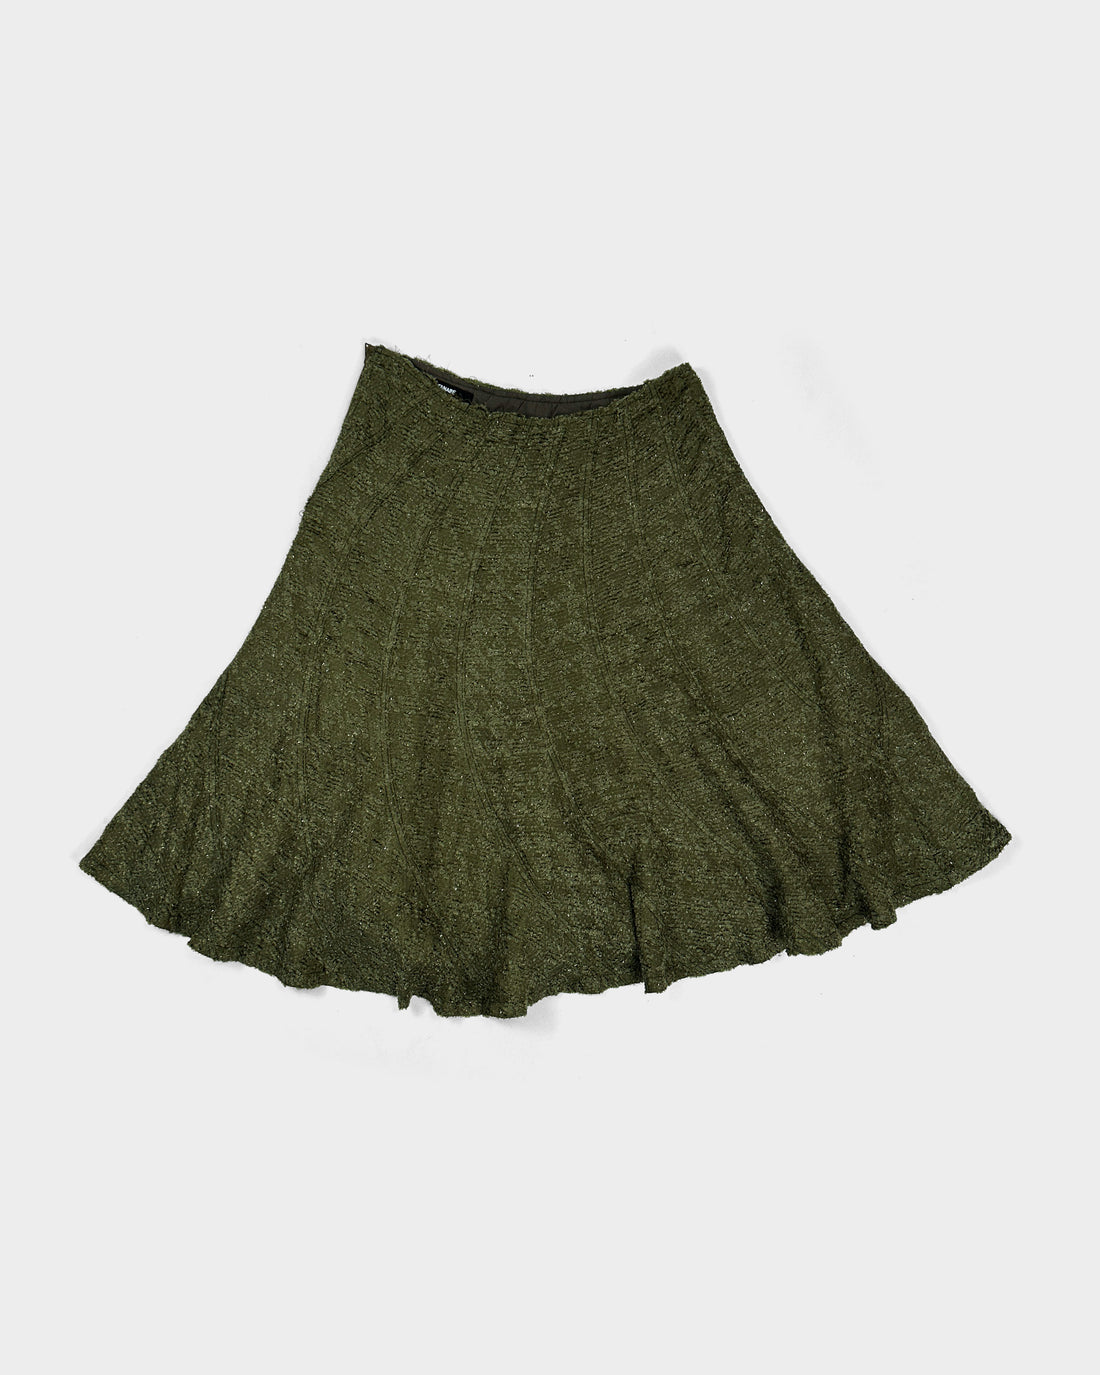 Junya Watanabe for Comme des Garçons Green Stitched Skirt F/W 2010